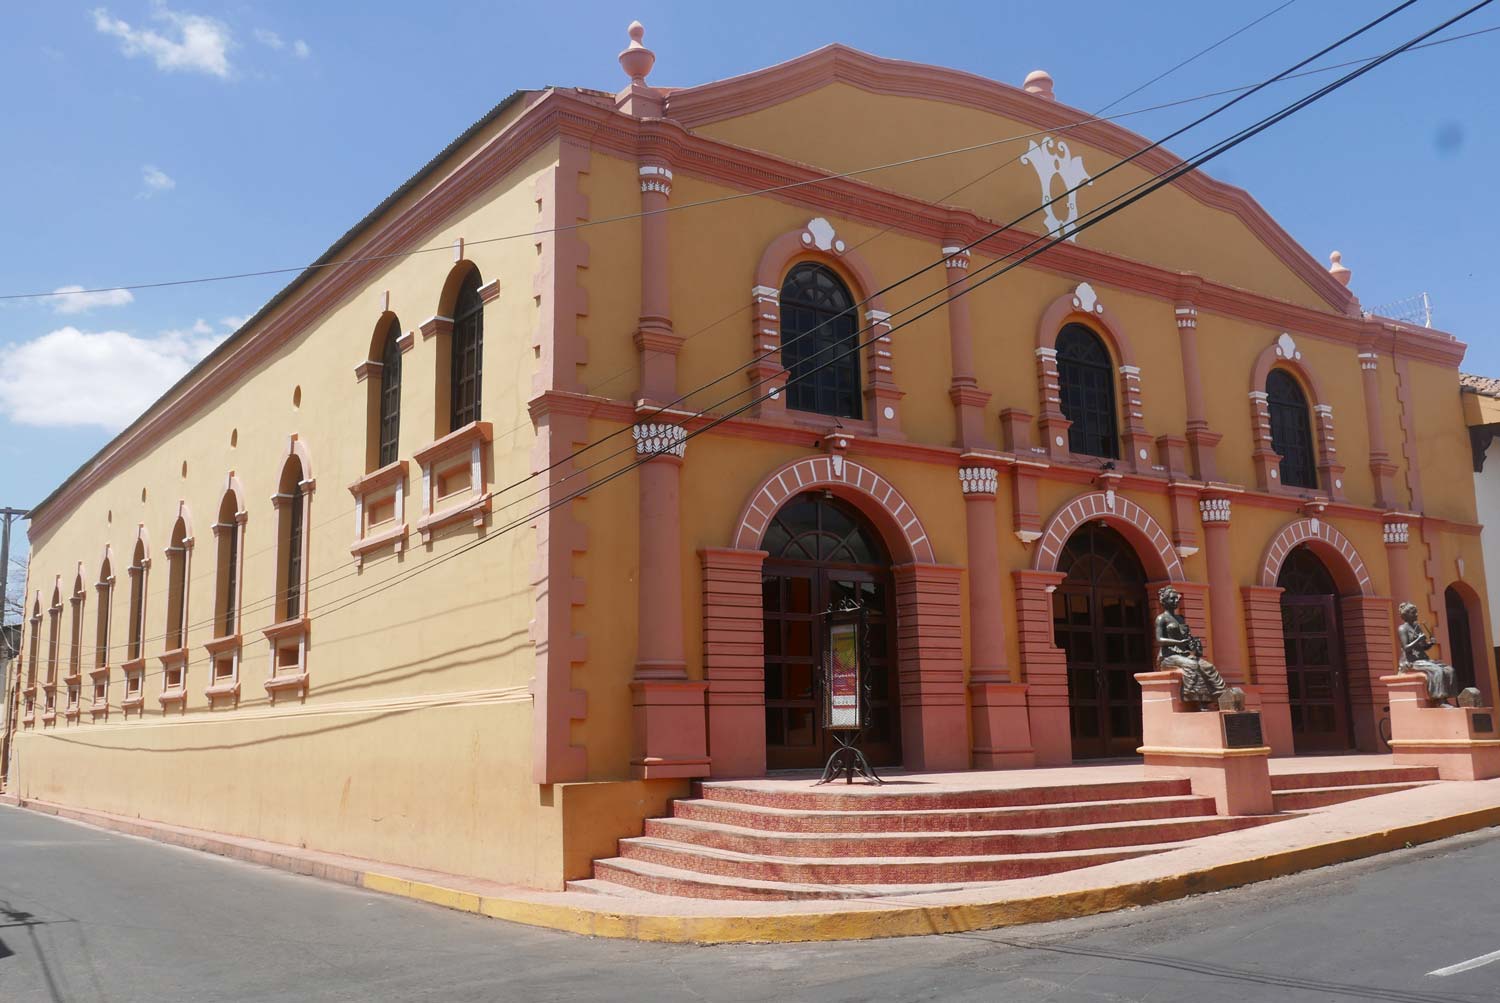 Theatre in Leon, Nicaragua